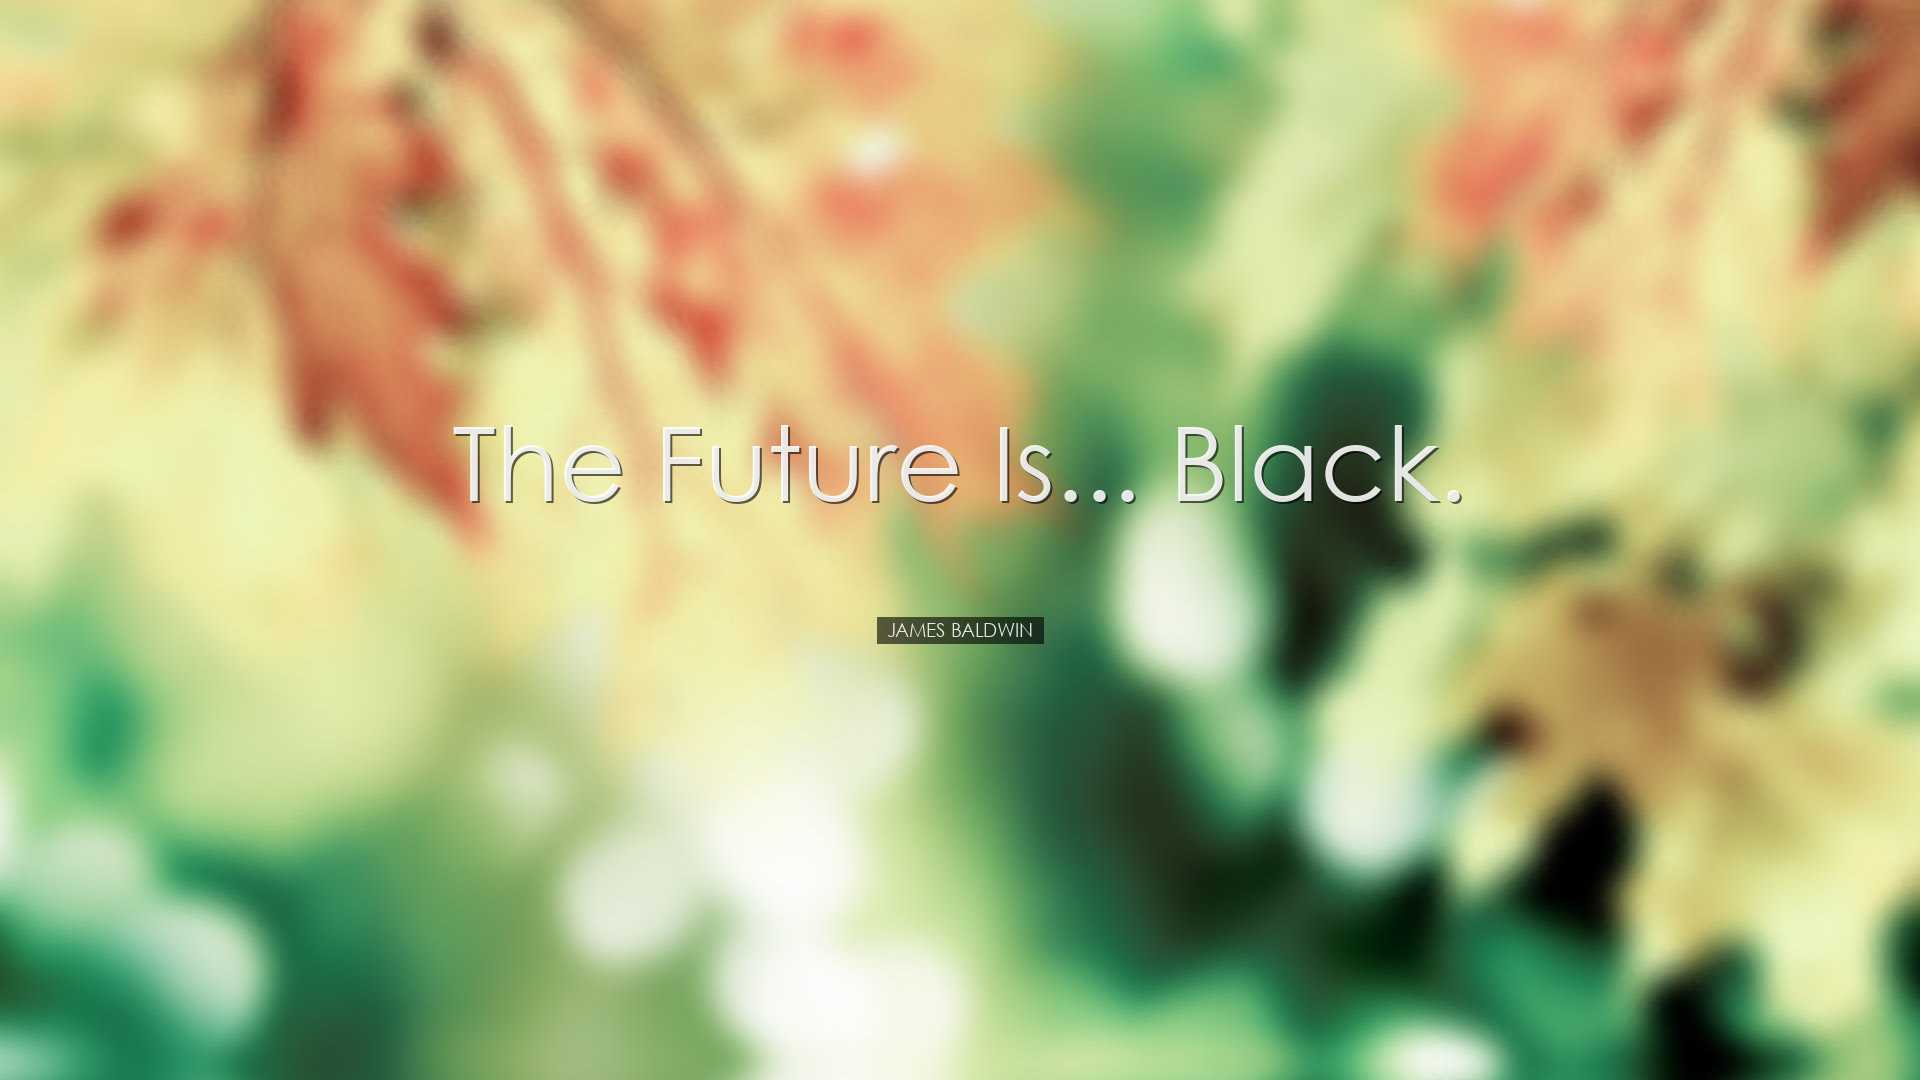 The future is... black. - James Baldwin